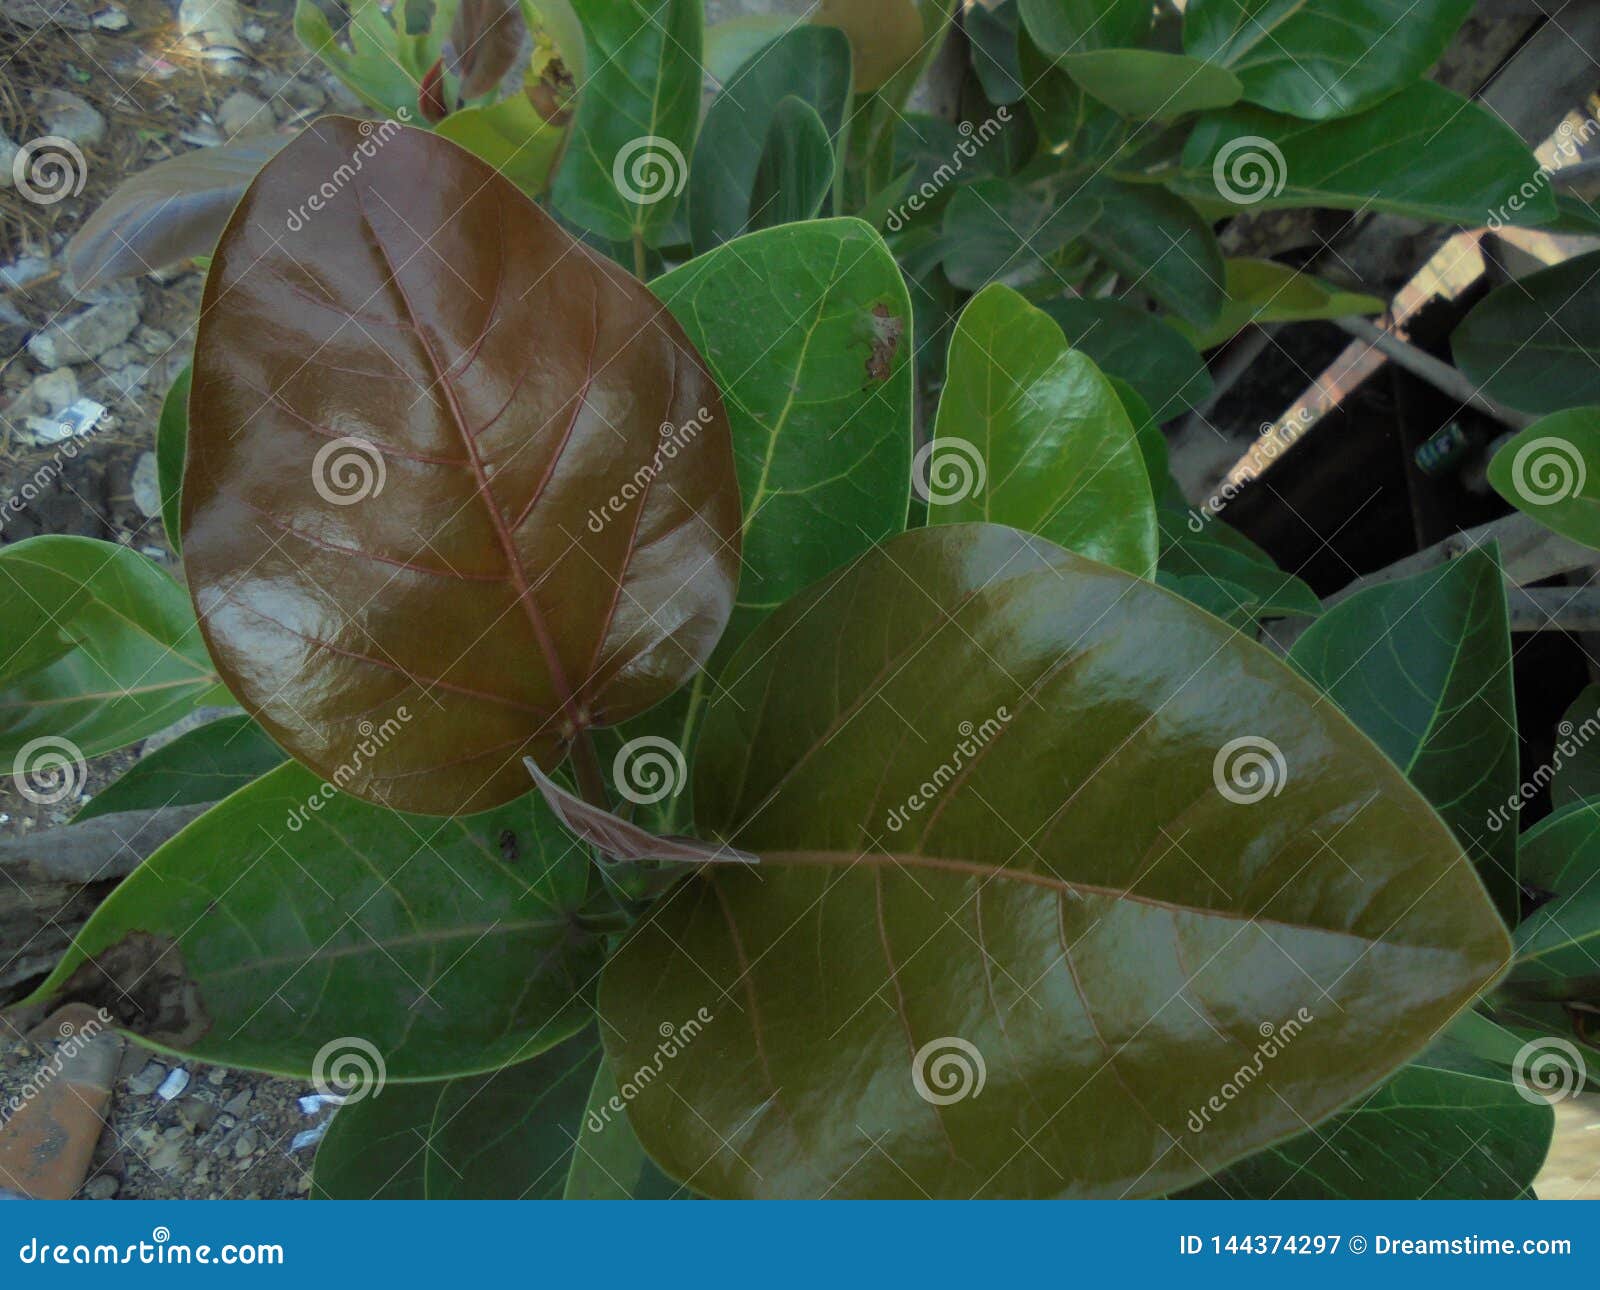 sapling of baby banian plant